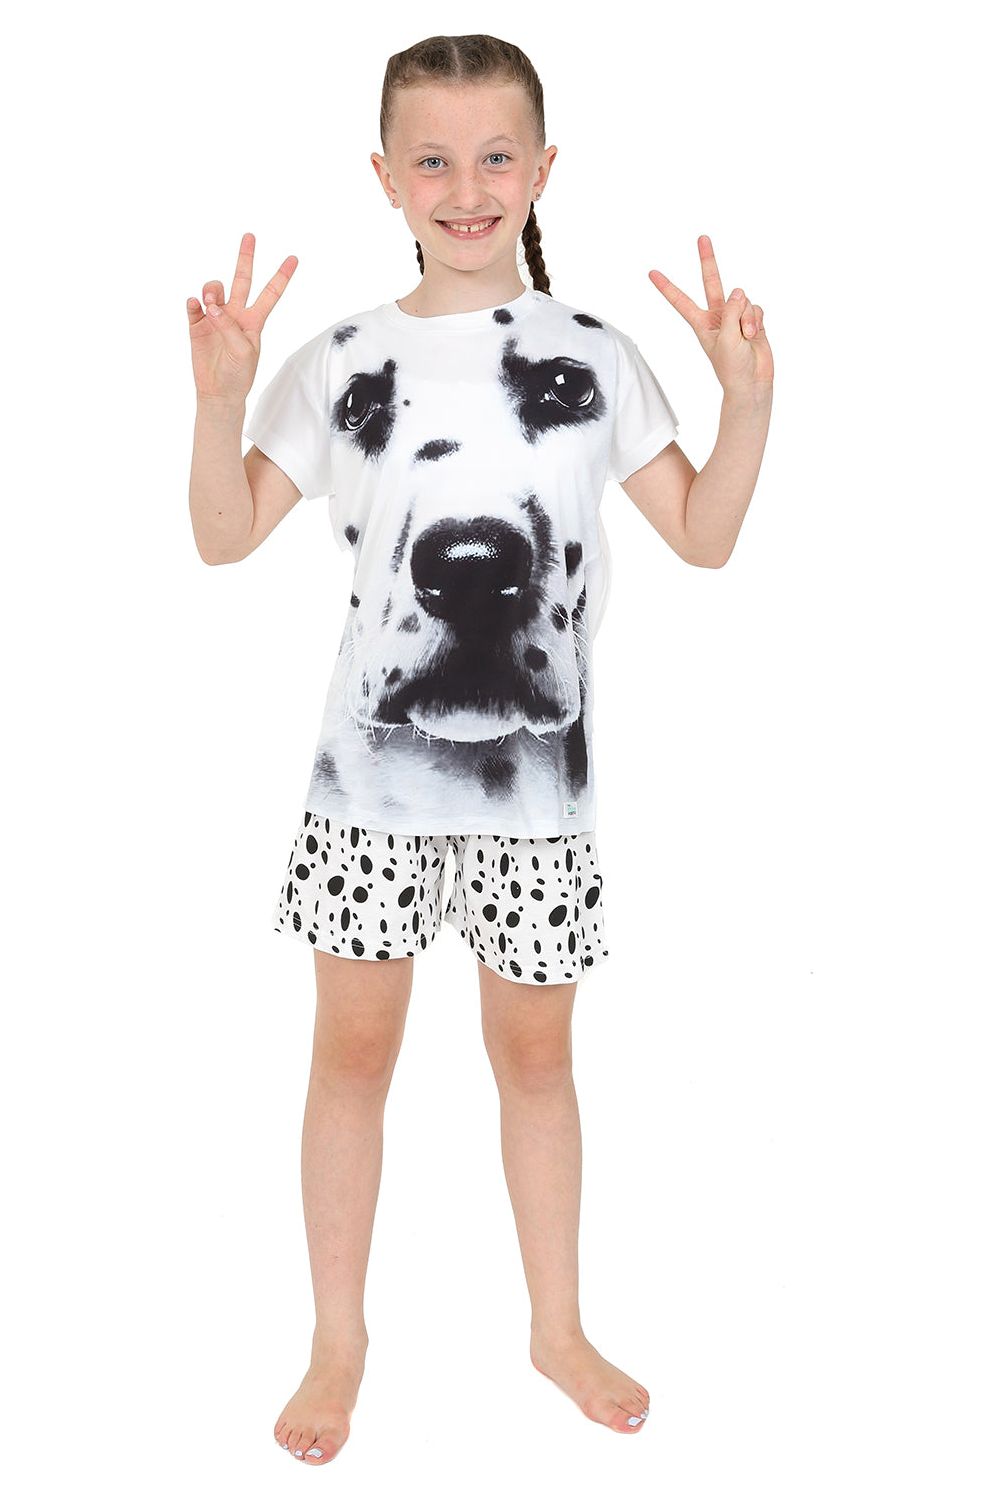 Dalmatian 3D Spotty Dog Girls shorts Pyjamas Paw Print